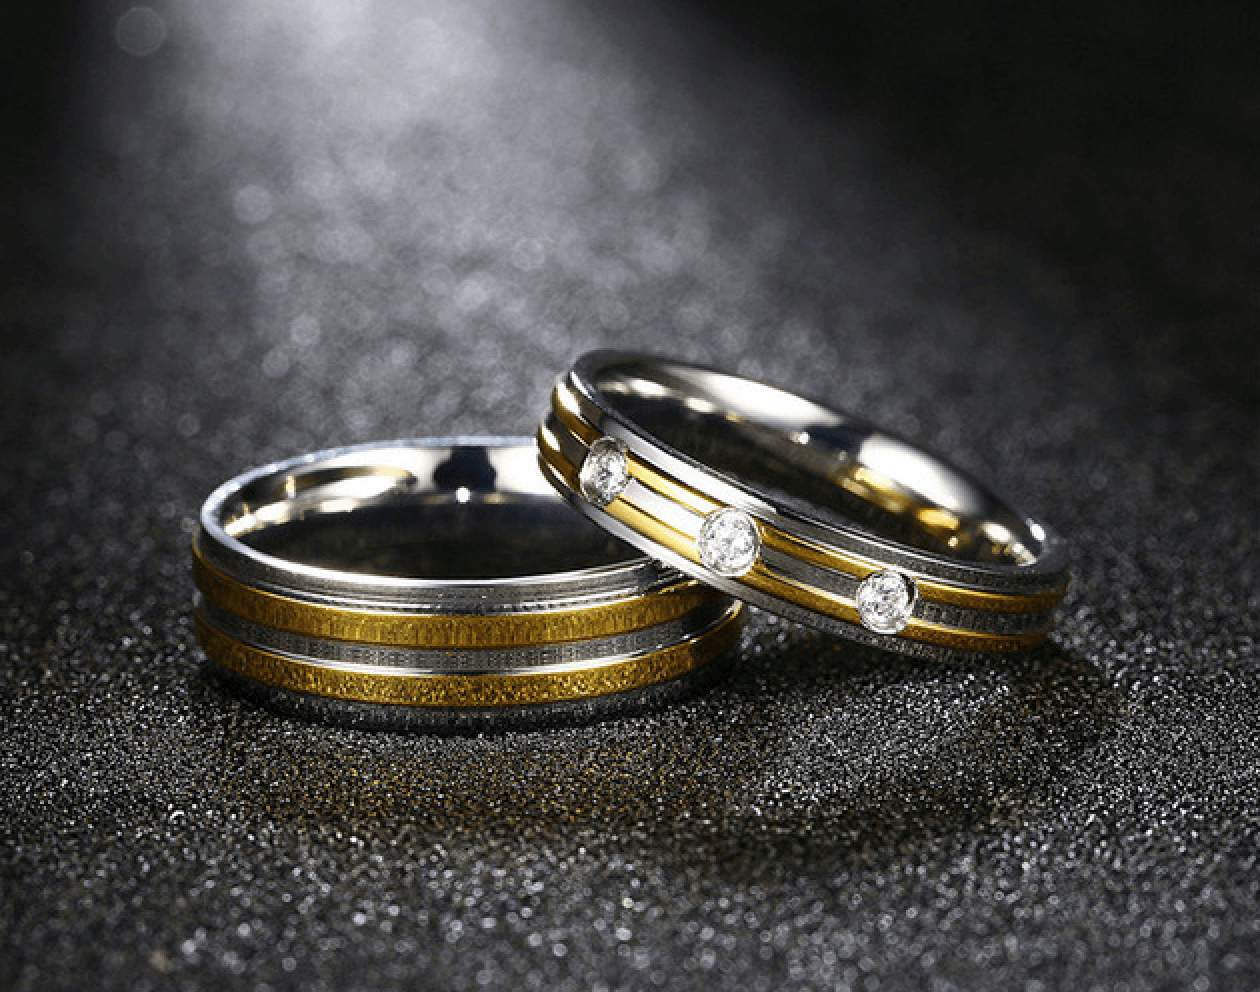 Buy Couple Rings For Luxury Online @ ZALORA Malaysia & Brunei